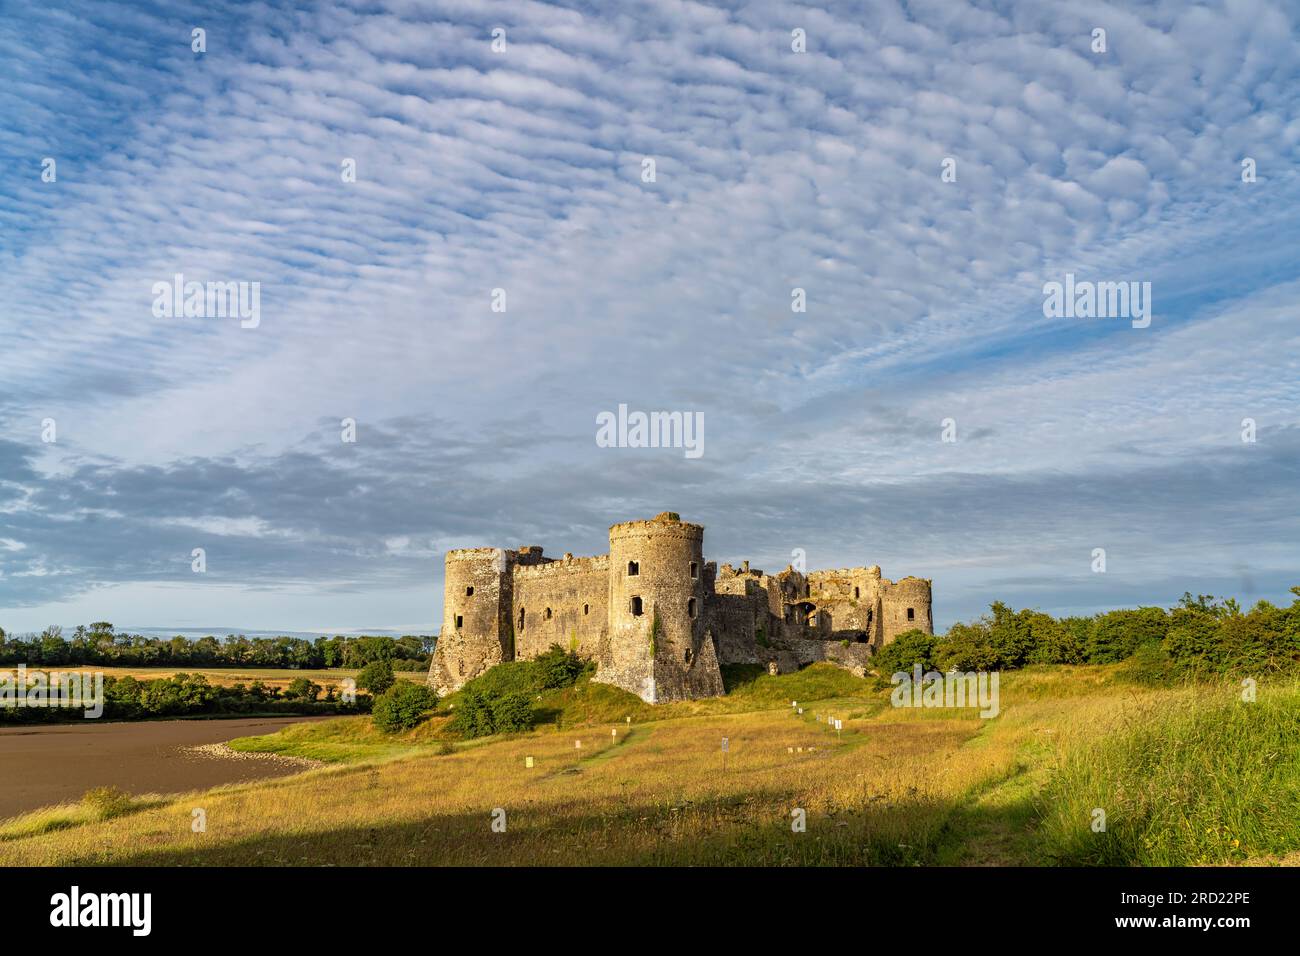 Burgruine Carew Castle, Pembrokeshire, Wales, Großbritannien, Europa | Carew Castle Ruin, Pembrokeshire, Wales, Vereinigtes Königreich Großbritannien, EUR Stockfoto